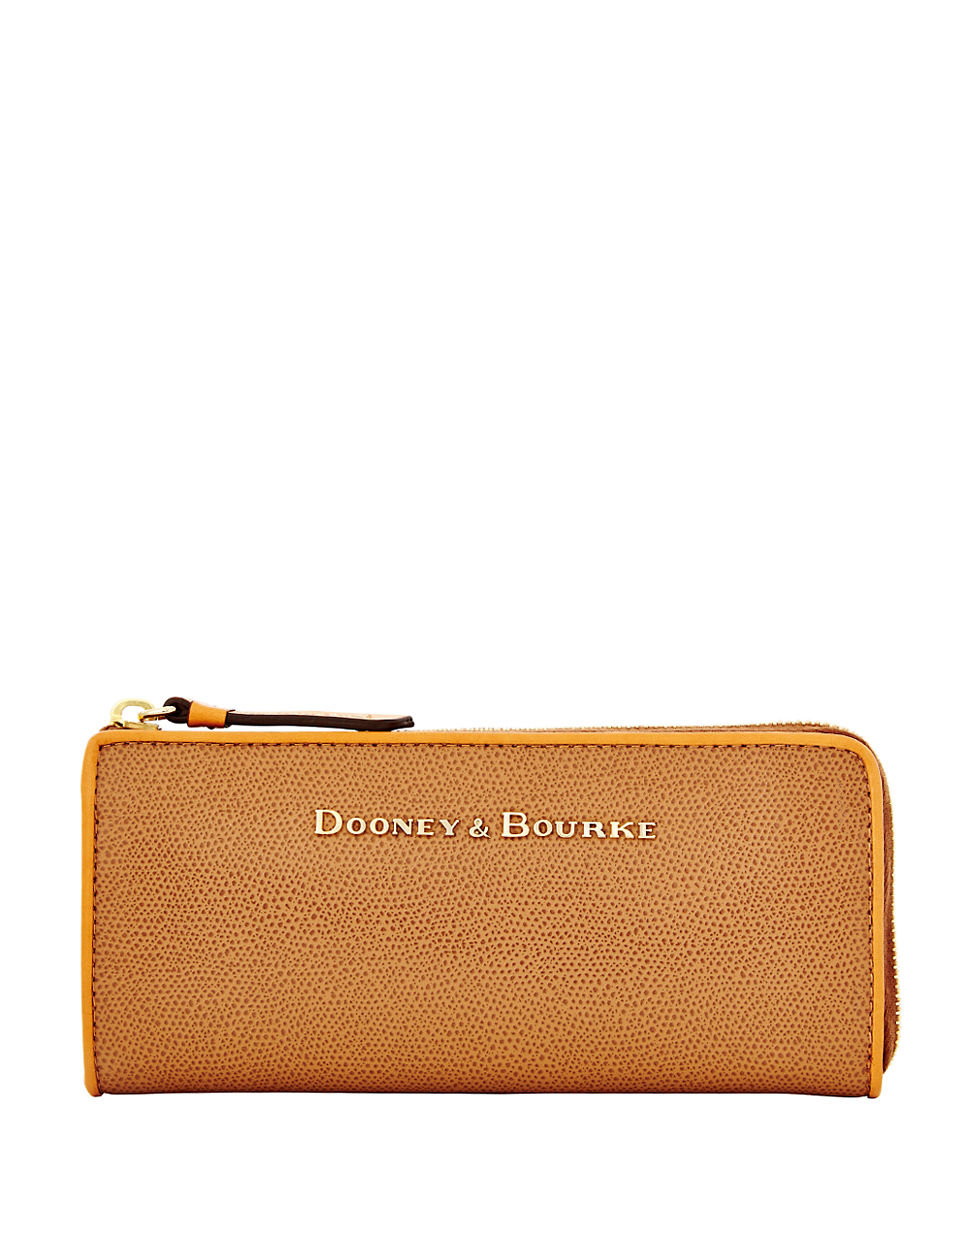 Dooney & Bourke Claremont Leather Wallet in Brown (Tan) | Lyst